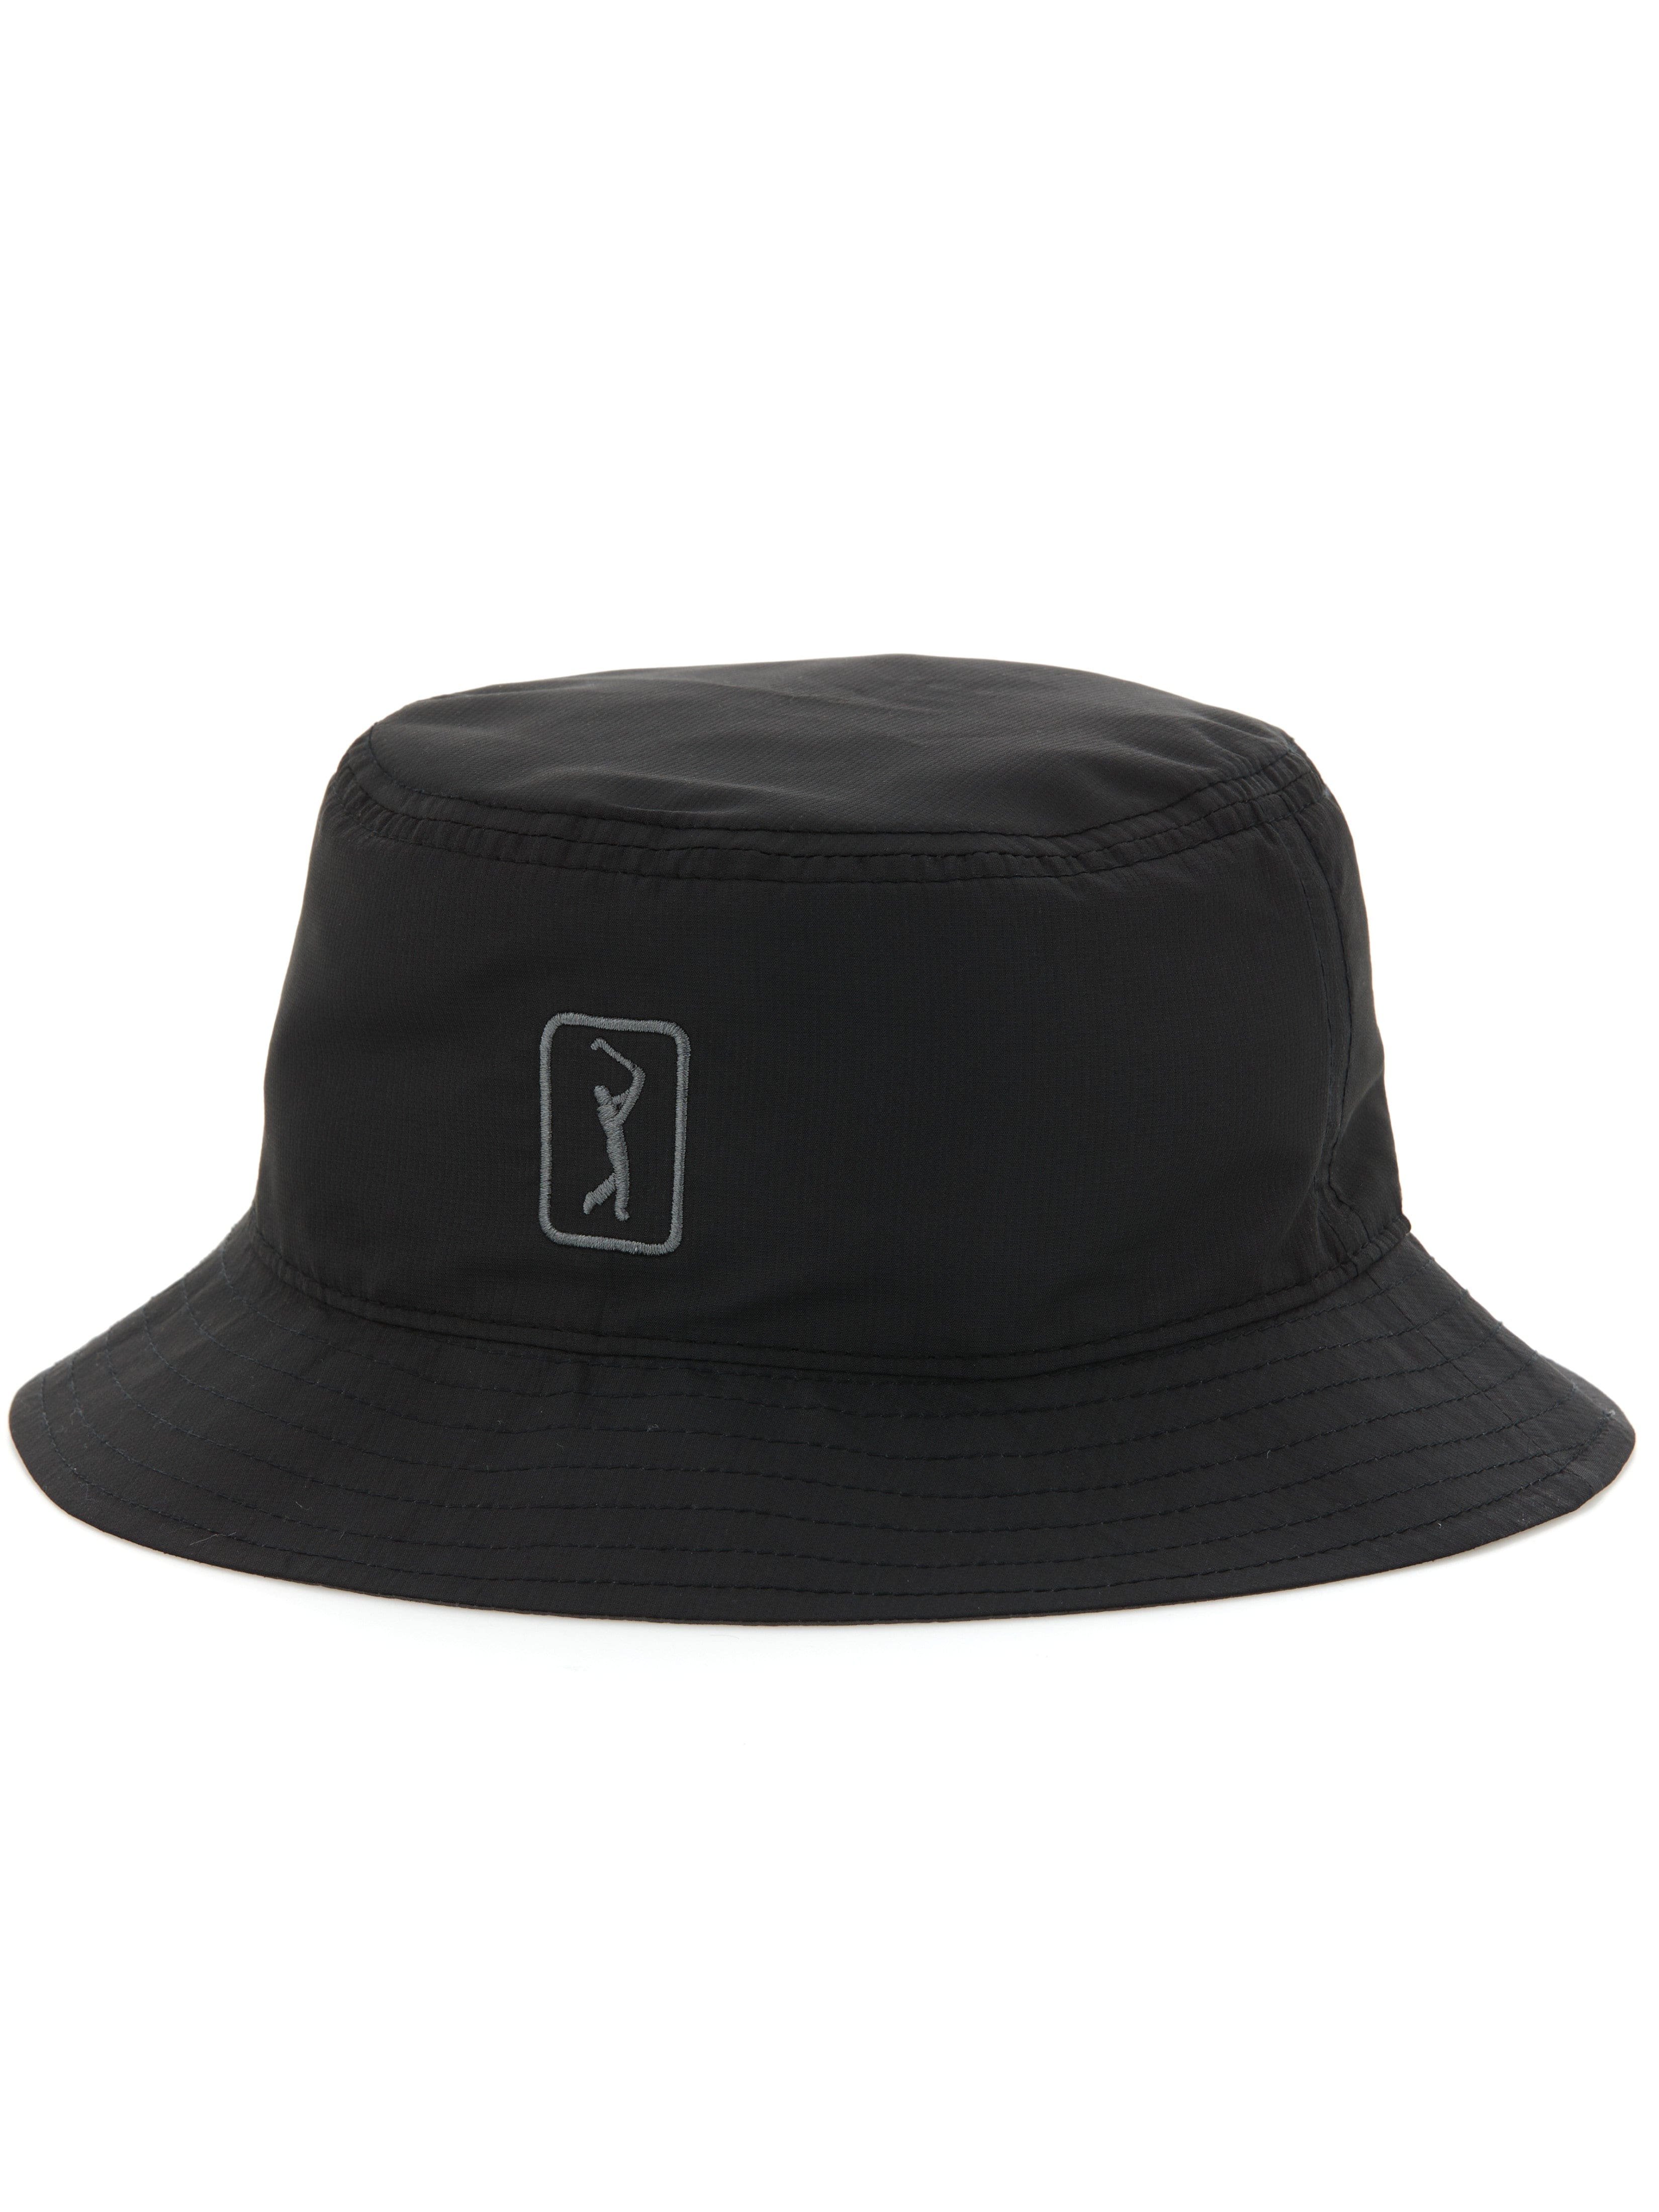 PGA TOUR Apparel Reversible Golf Bucket Hat, Black, 100% Polyester | Golf Apparel Shop